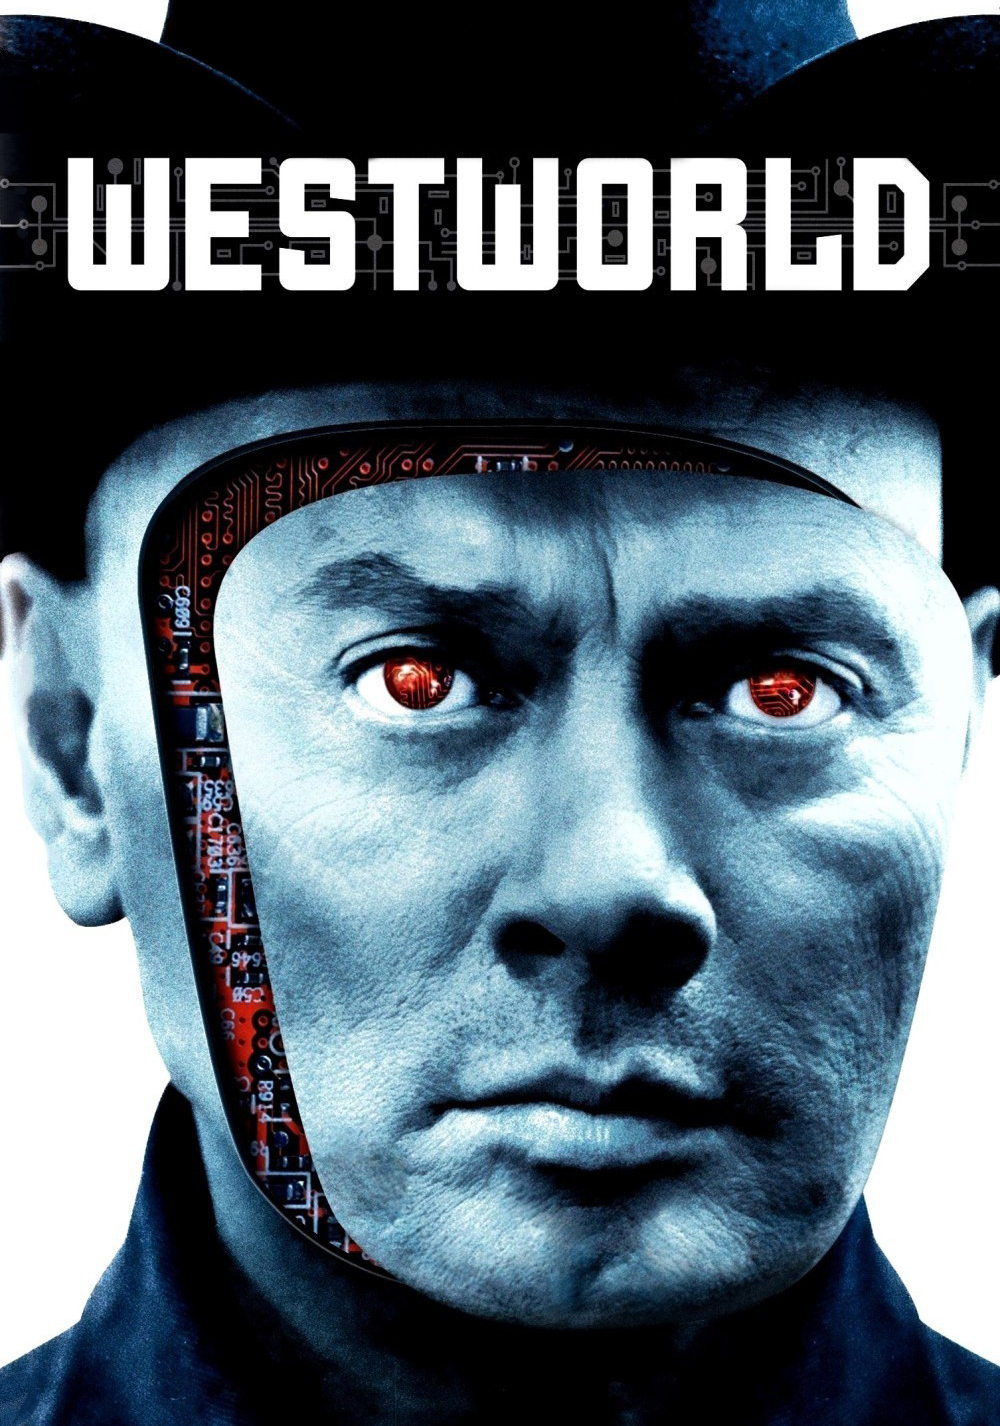 Poster Westworld